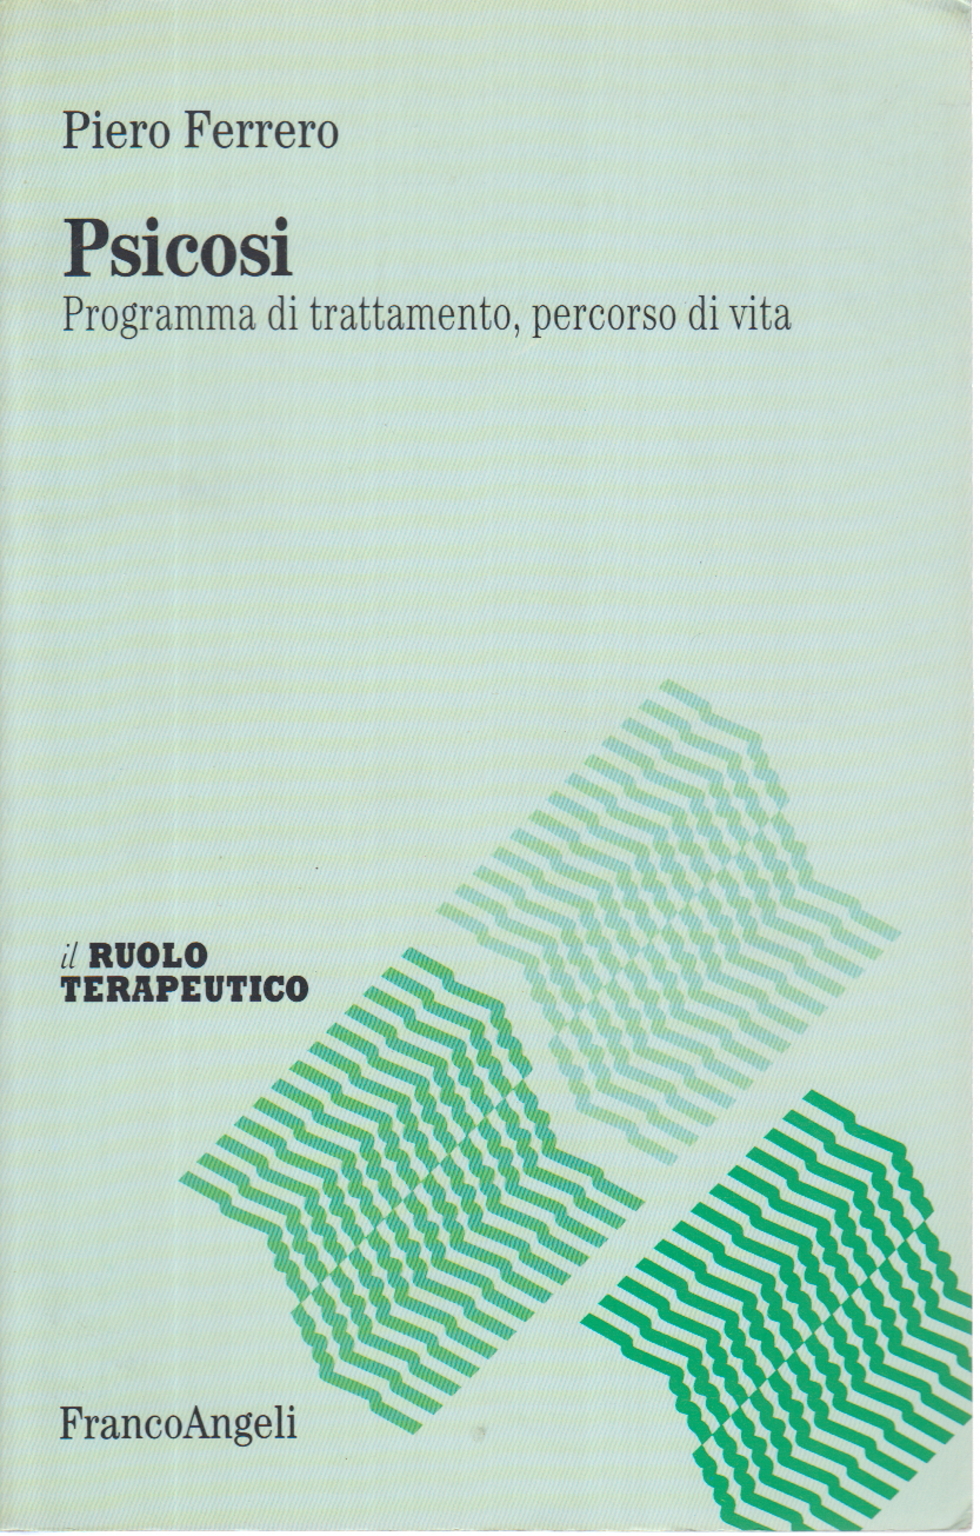 Psychosis, Piero Ferrero